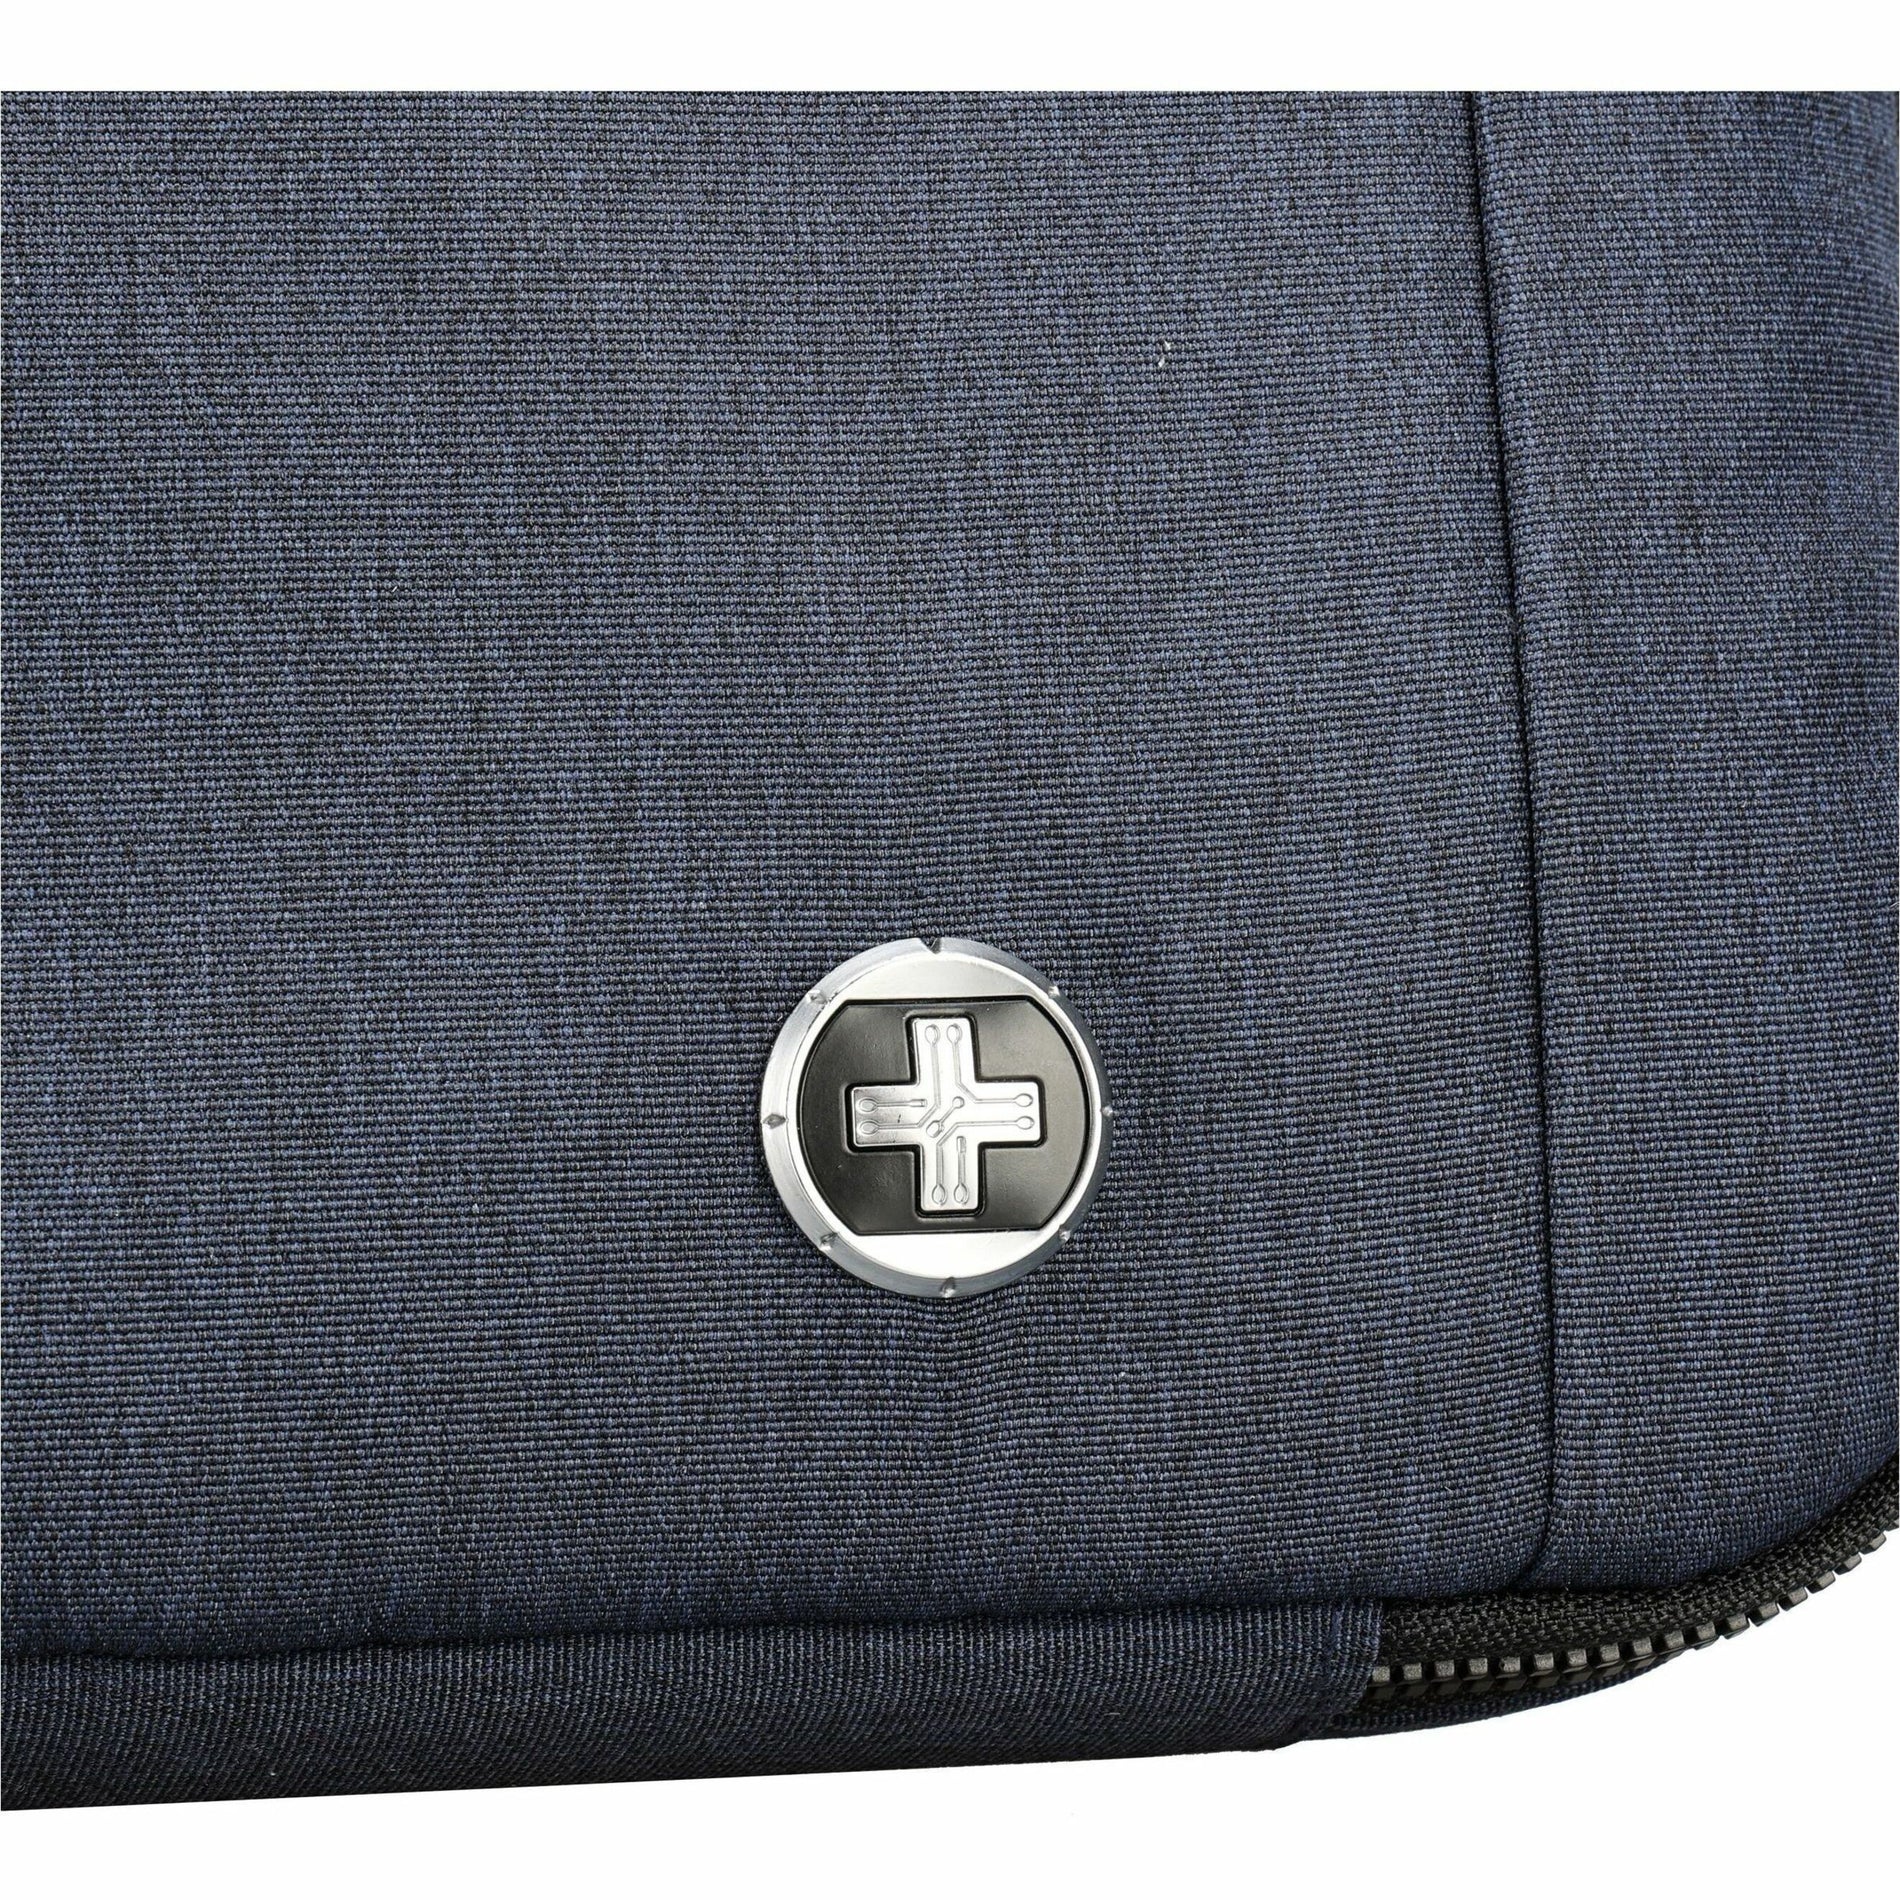 Swissdigital Design SD8525-12 Notebook Case, Navy Blue Sleeve for MacBook Pro and Notebook